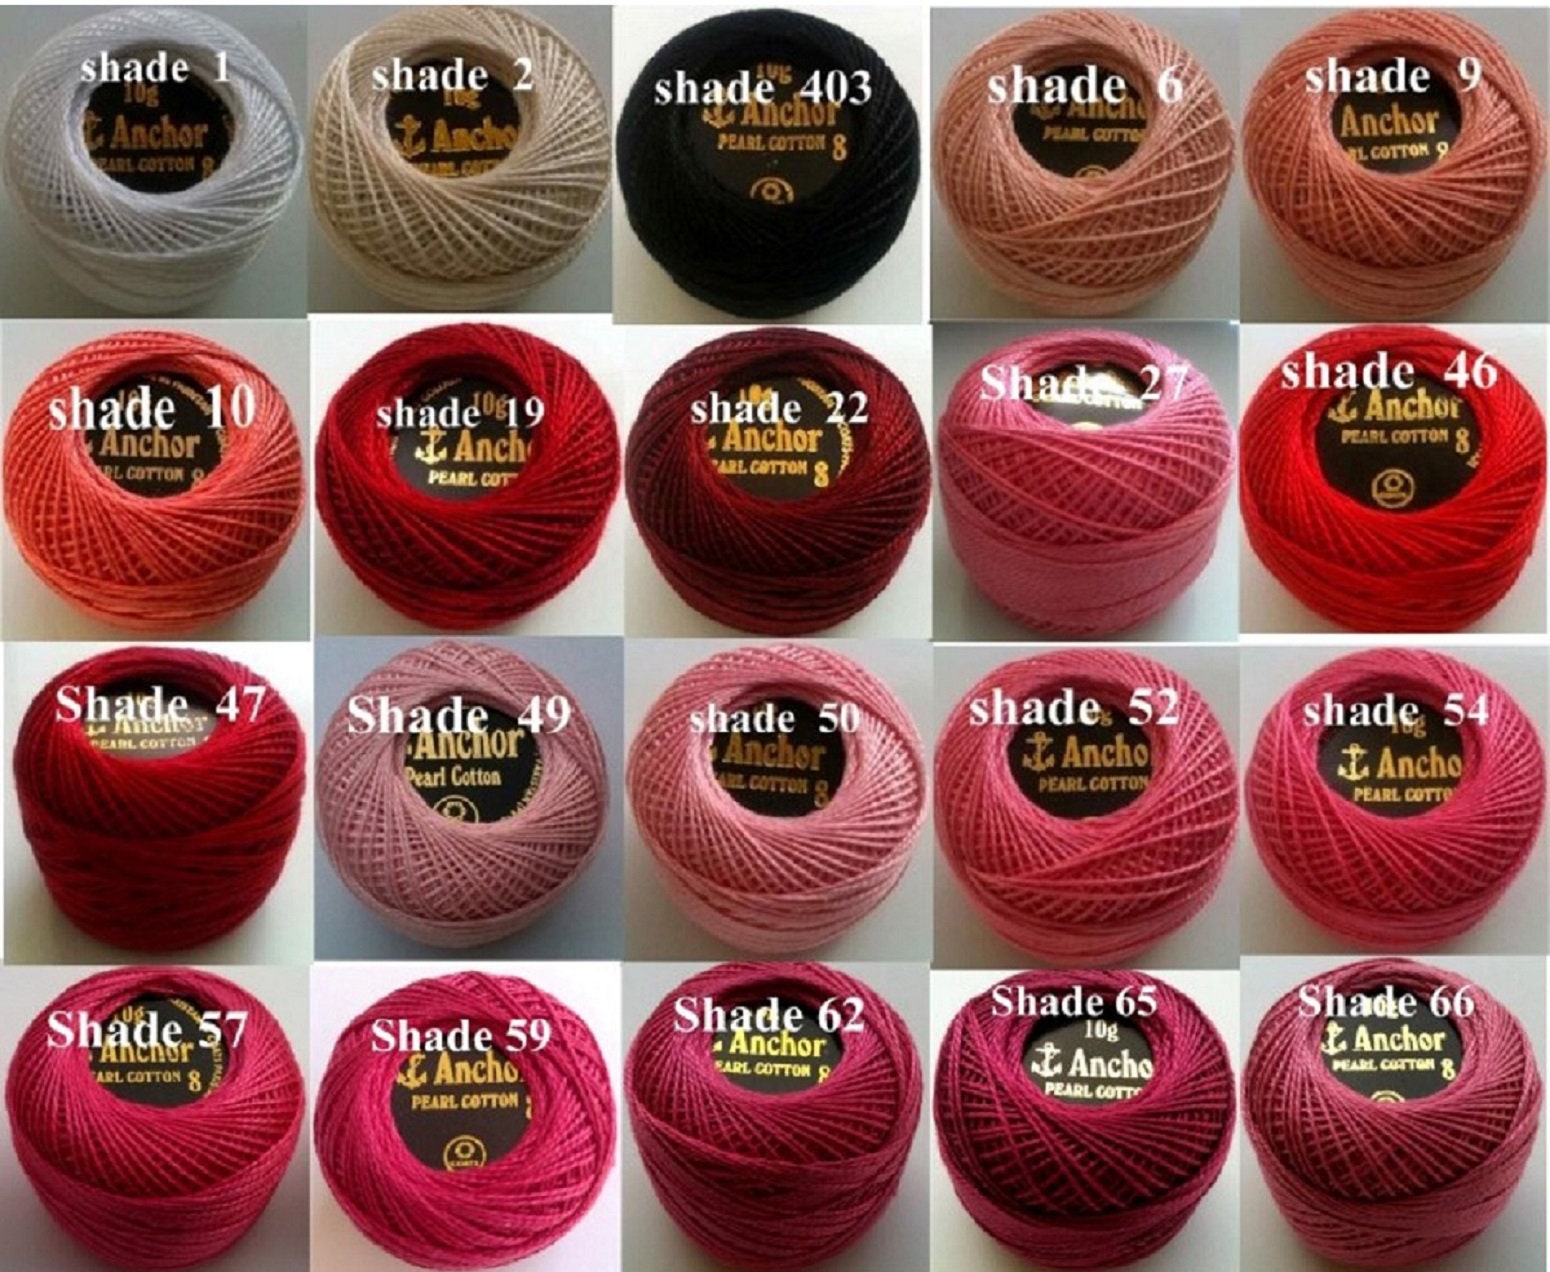 20 Variegated Anchor Balls Anchor Crochet Cotton Thread Balls 